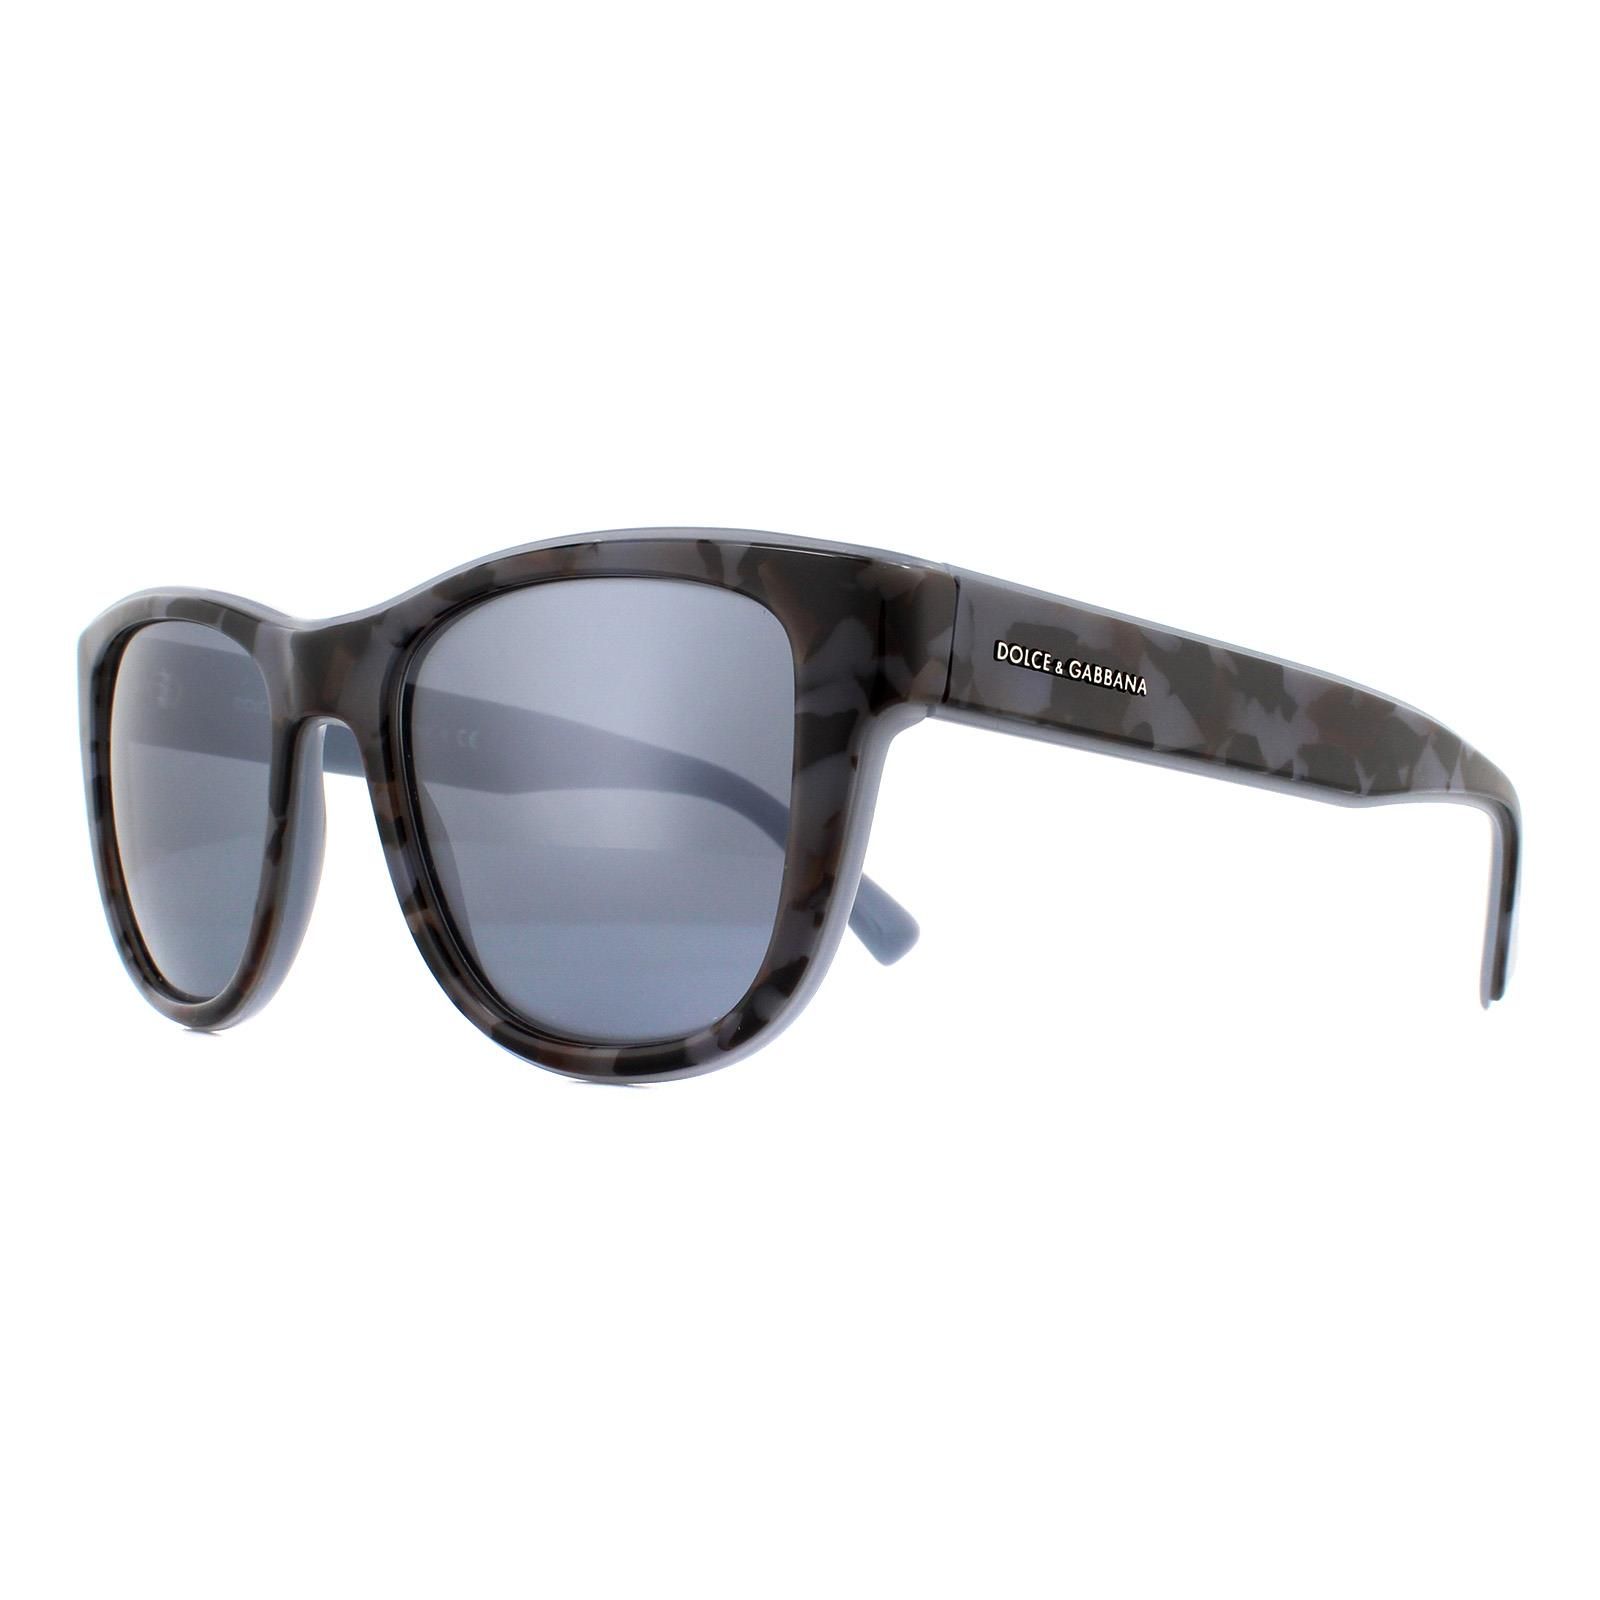 Dolce & Gabbana Sunglasses 4284 3072Y6 Camo Grey on Grey Matte Grey Silver Mirror